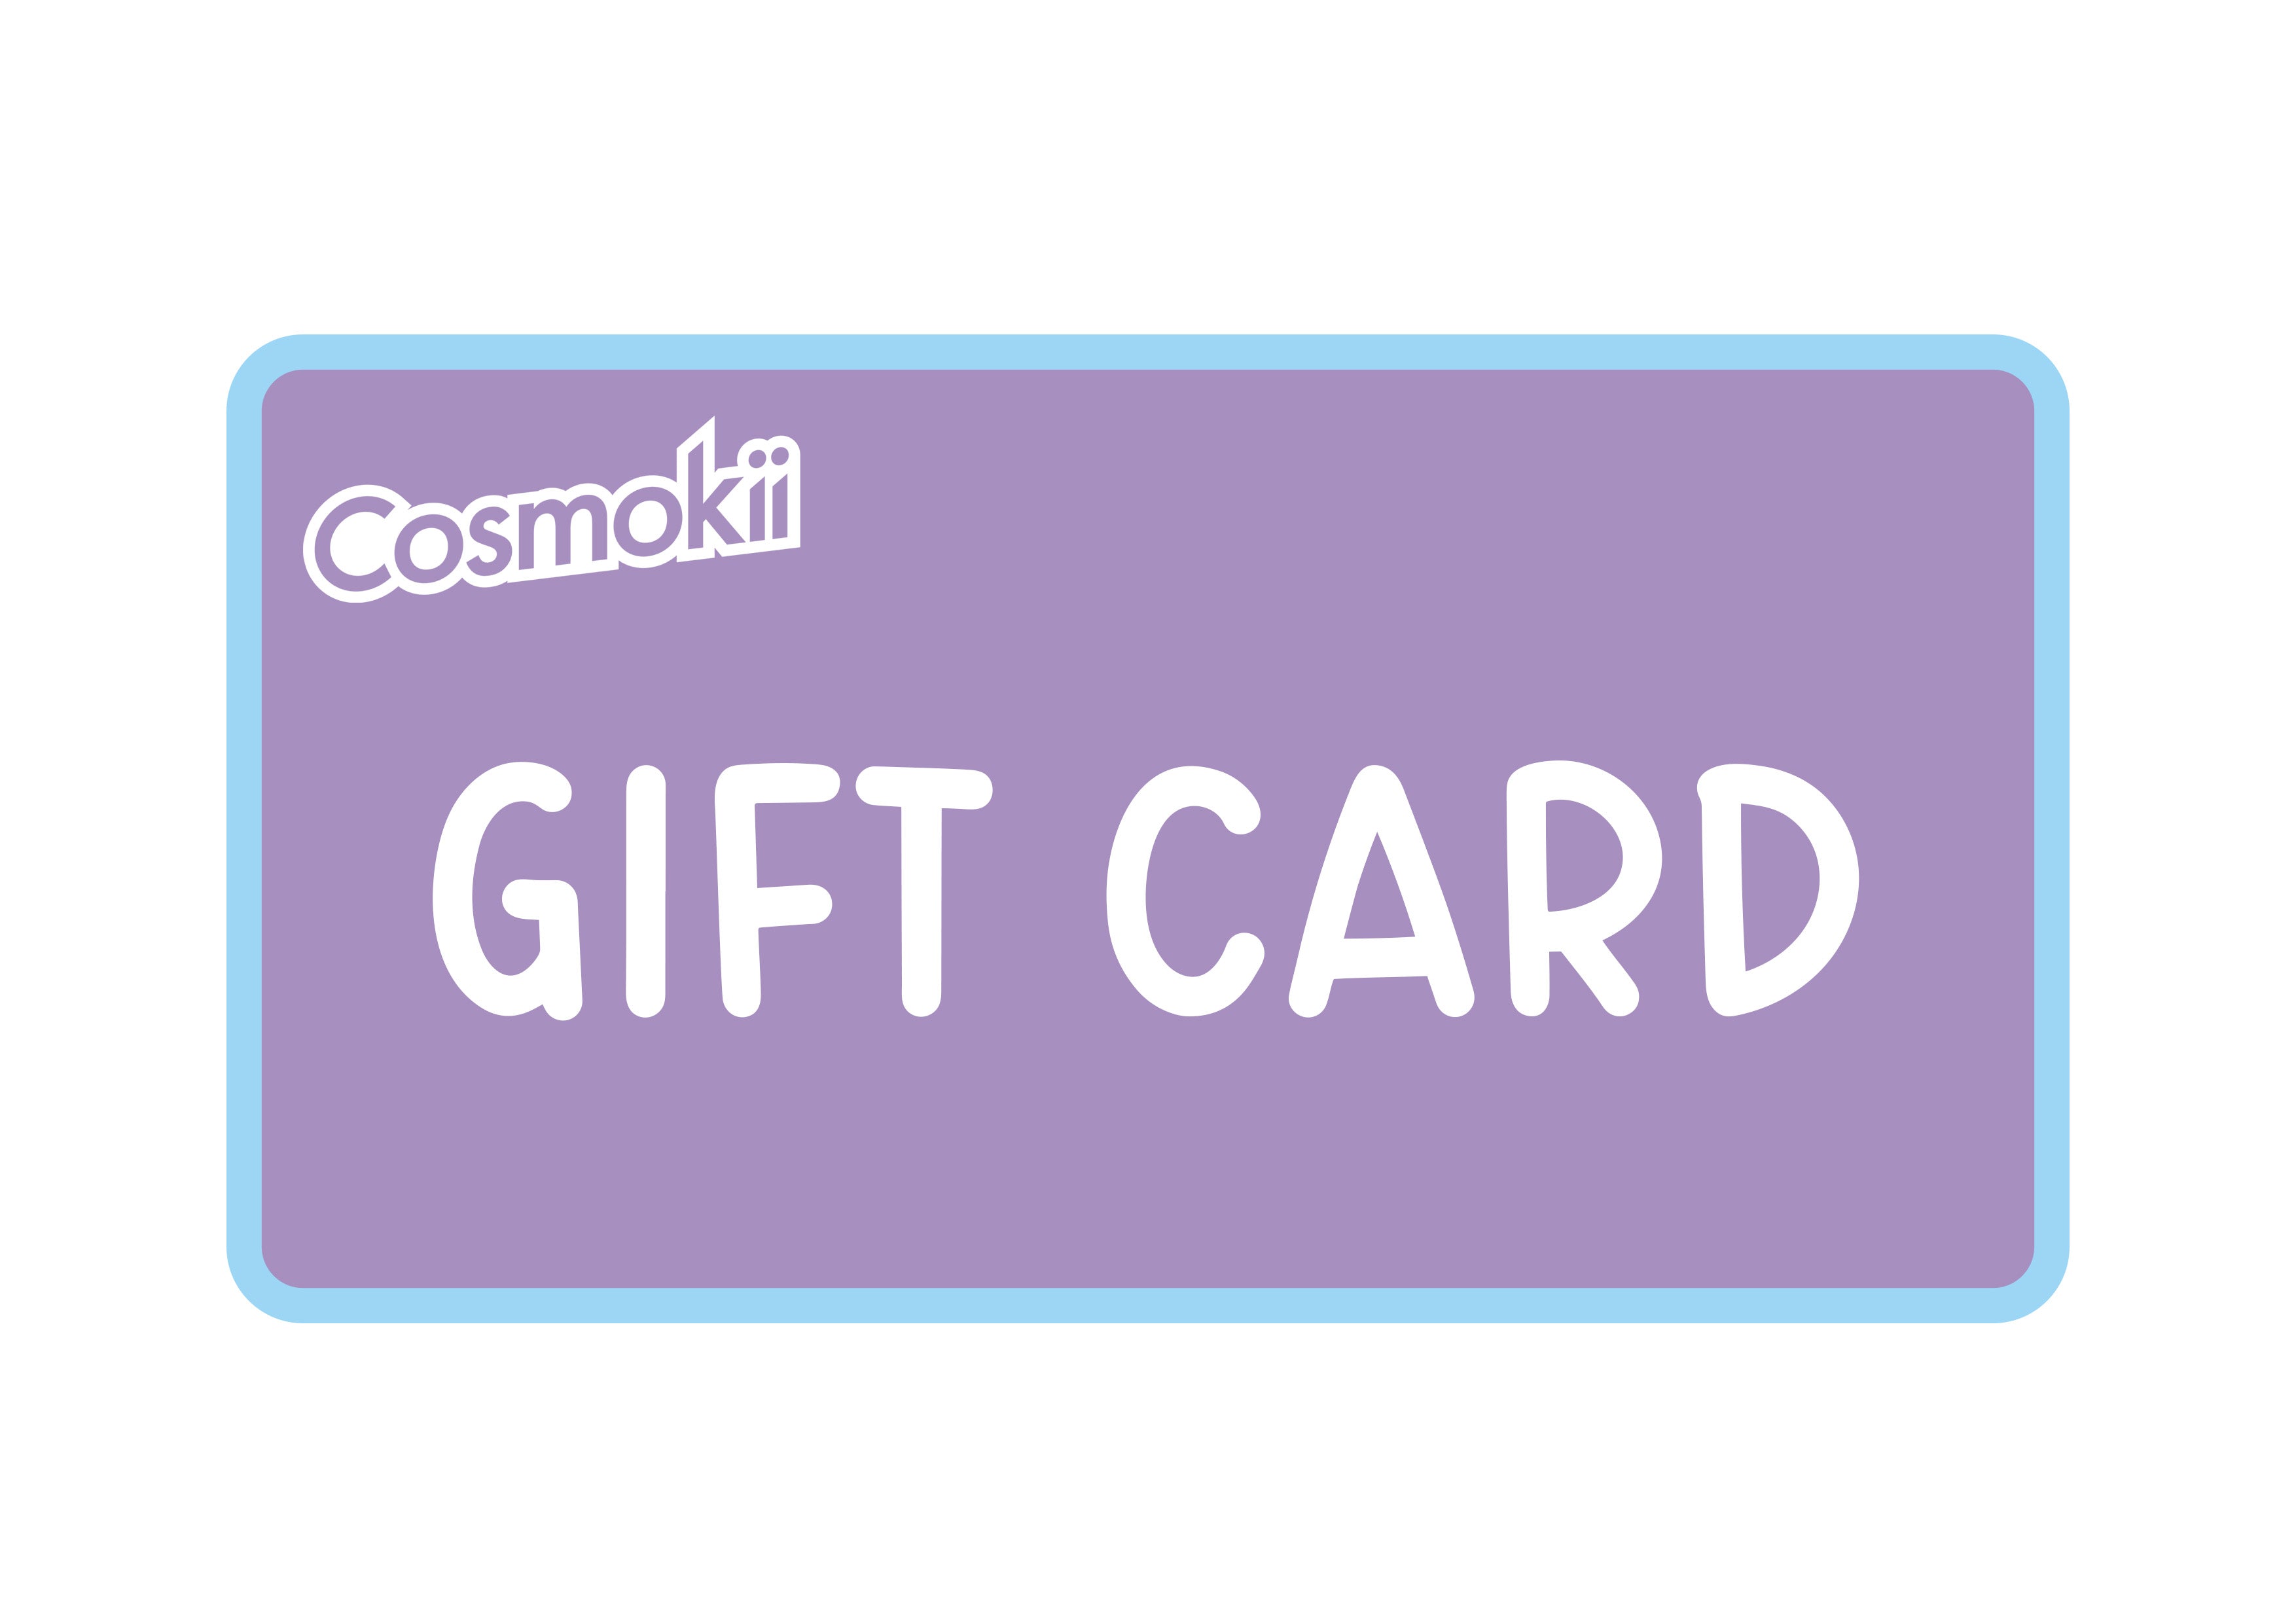 Cosmokii Gift Card